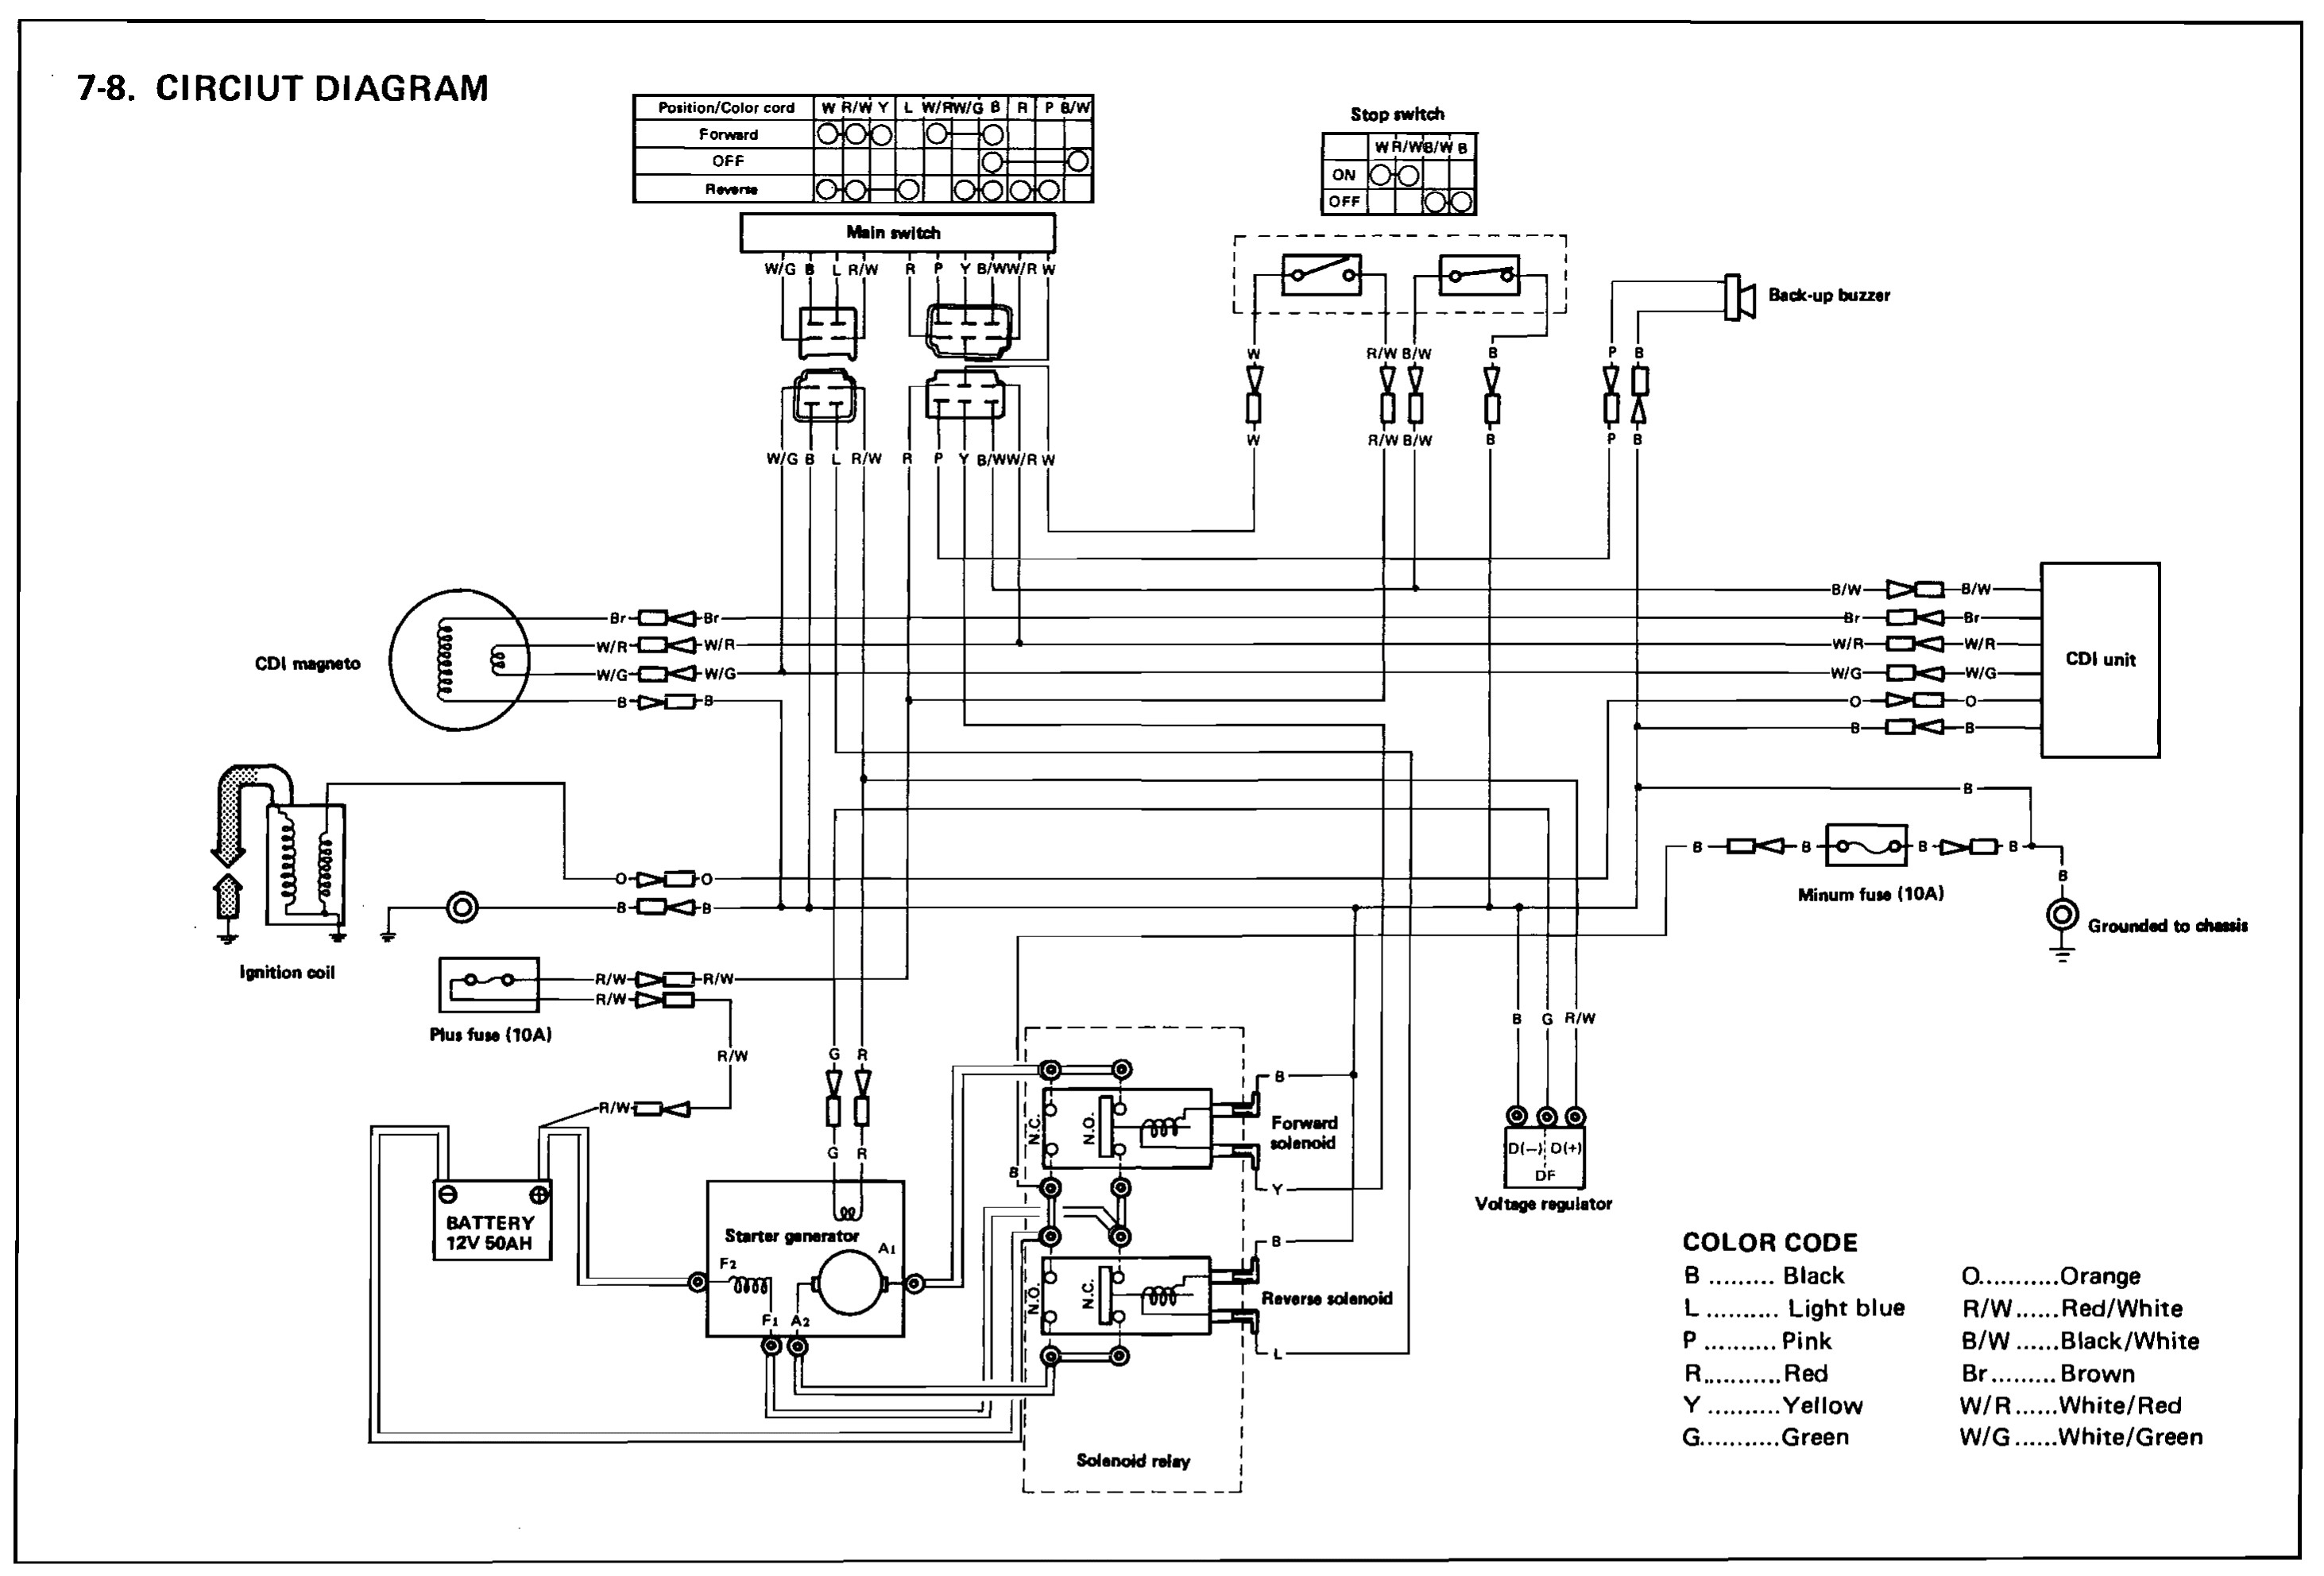 Vw Golf Engine Diagram Wiring Diagram for Yamaha G16 Golf Cart Free Download Wiring Diagram Of Vw Golf Engine Diagram